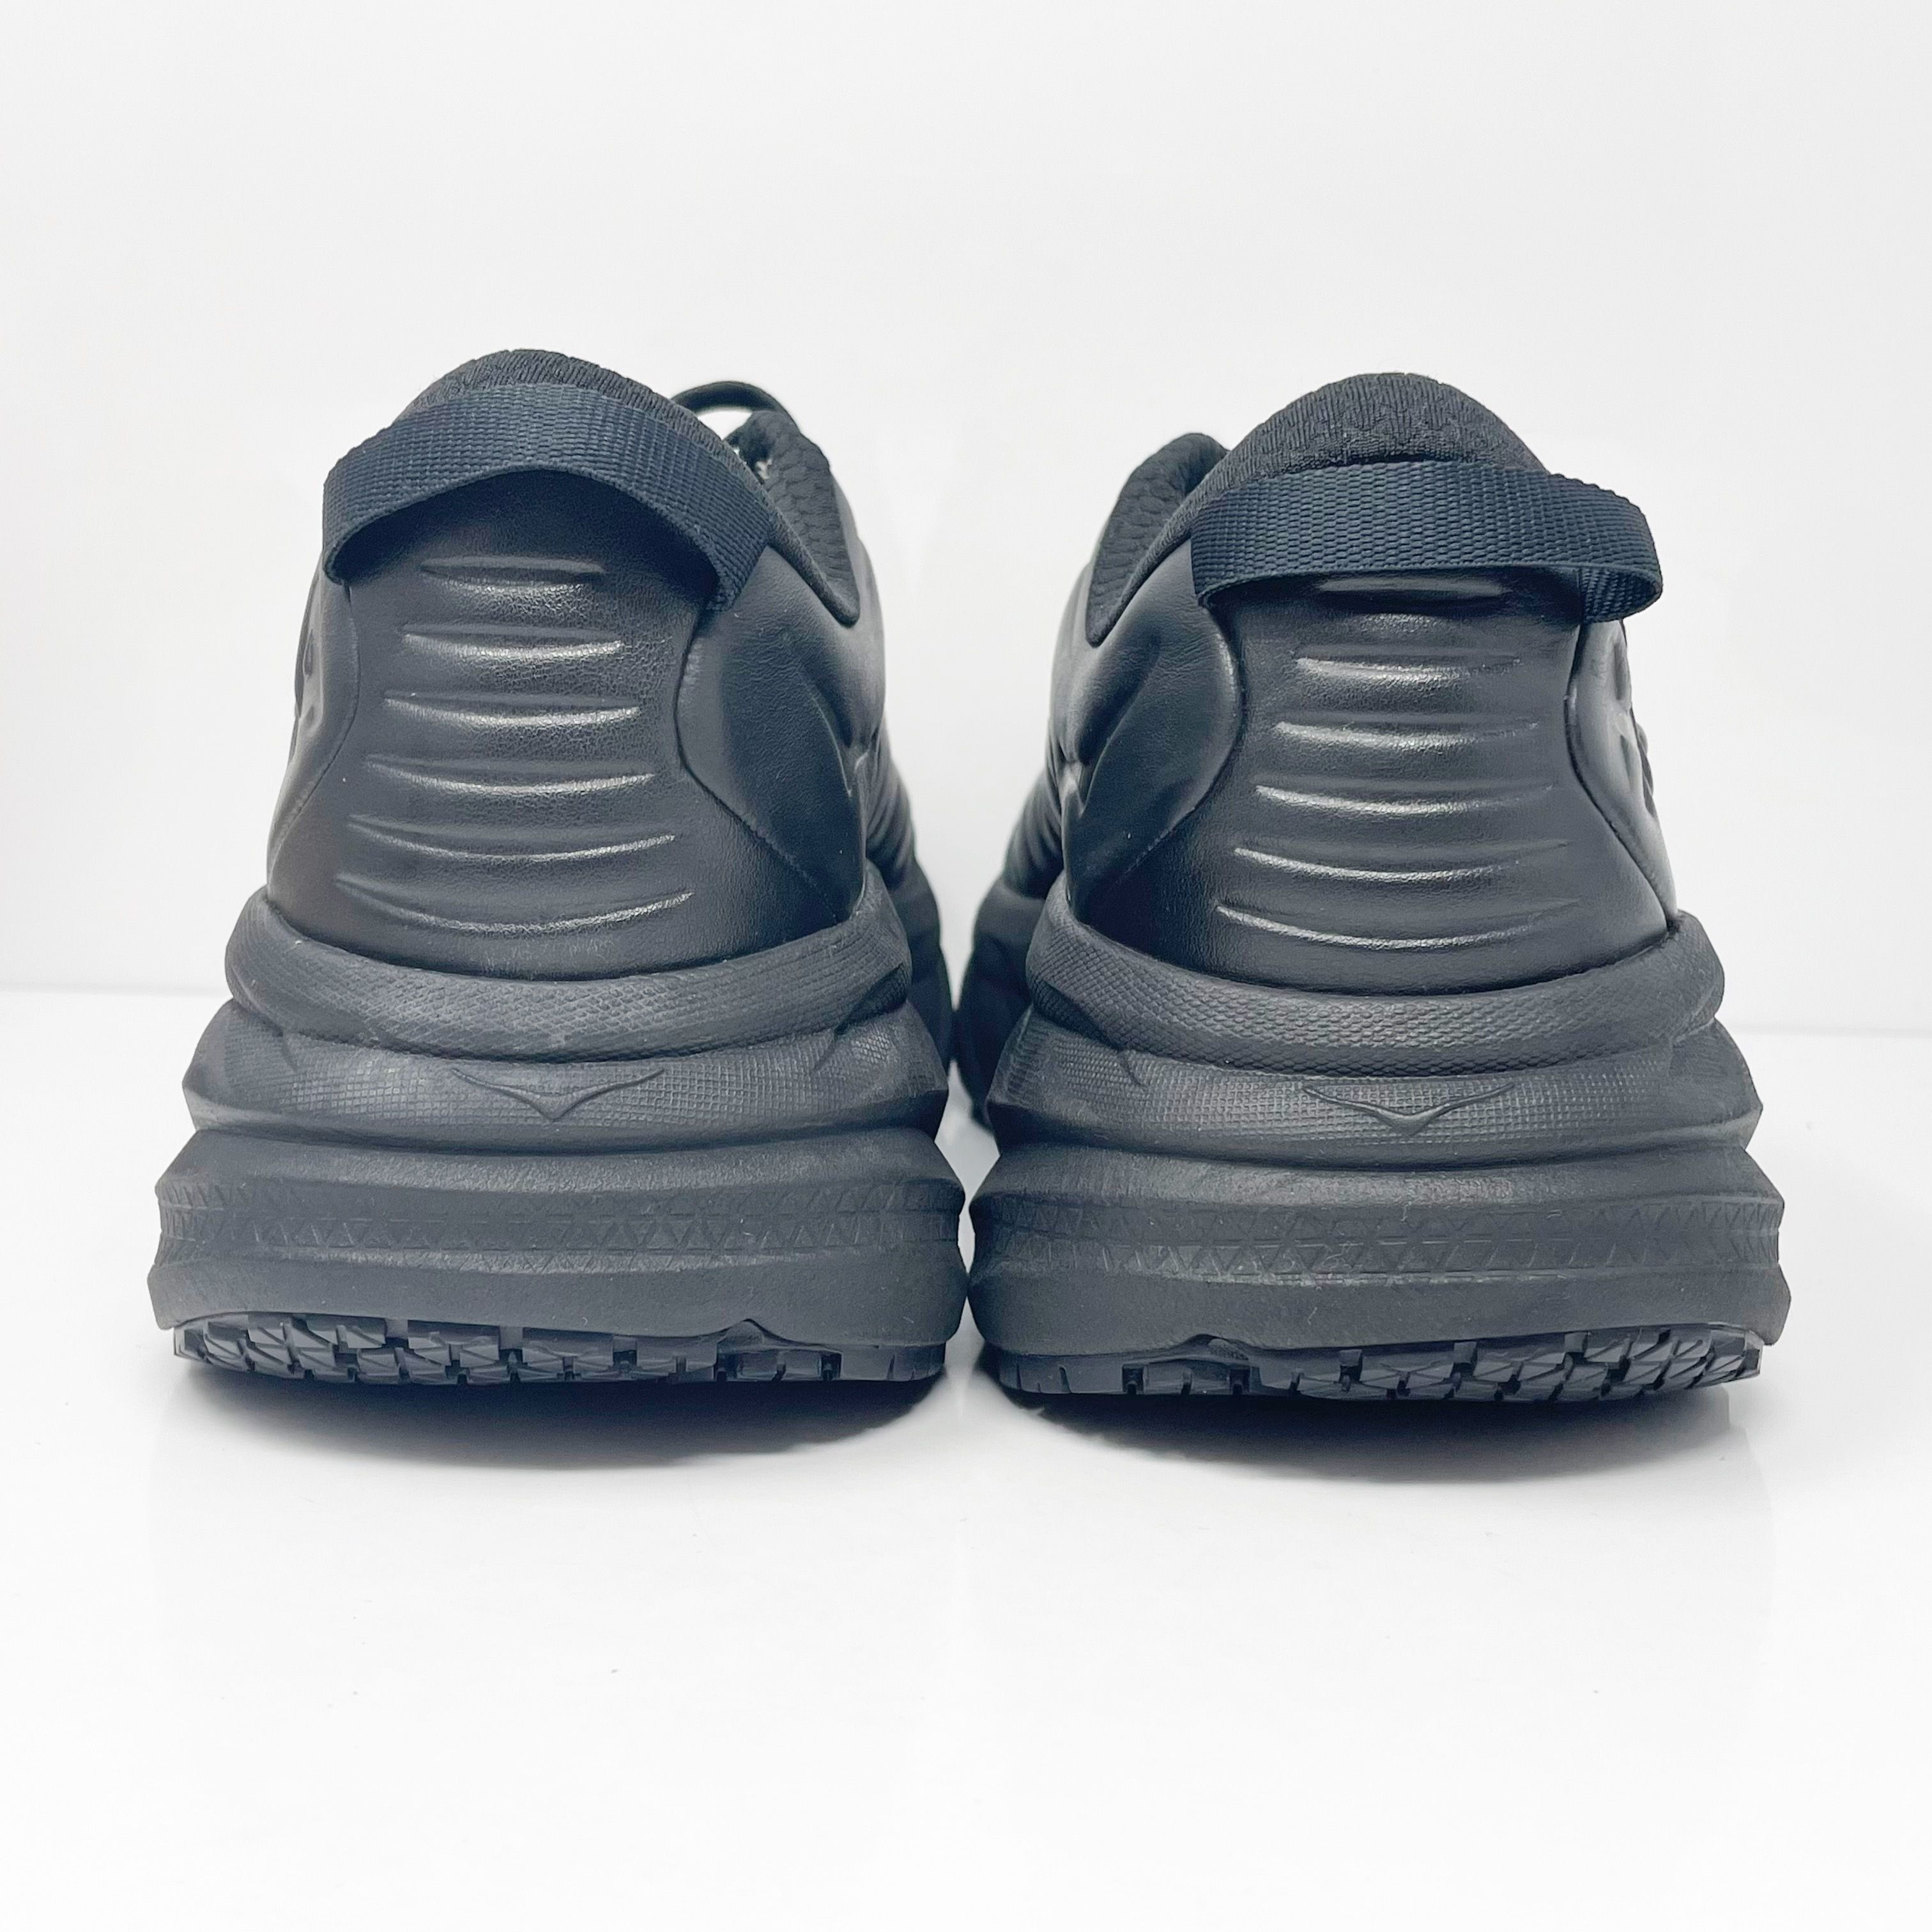 Hoka One One Mens Bondi SR 1110520 BBLC Black Casual Shoes Sneakers ...